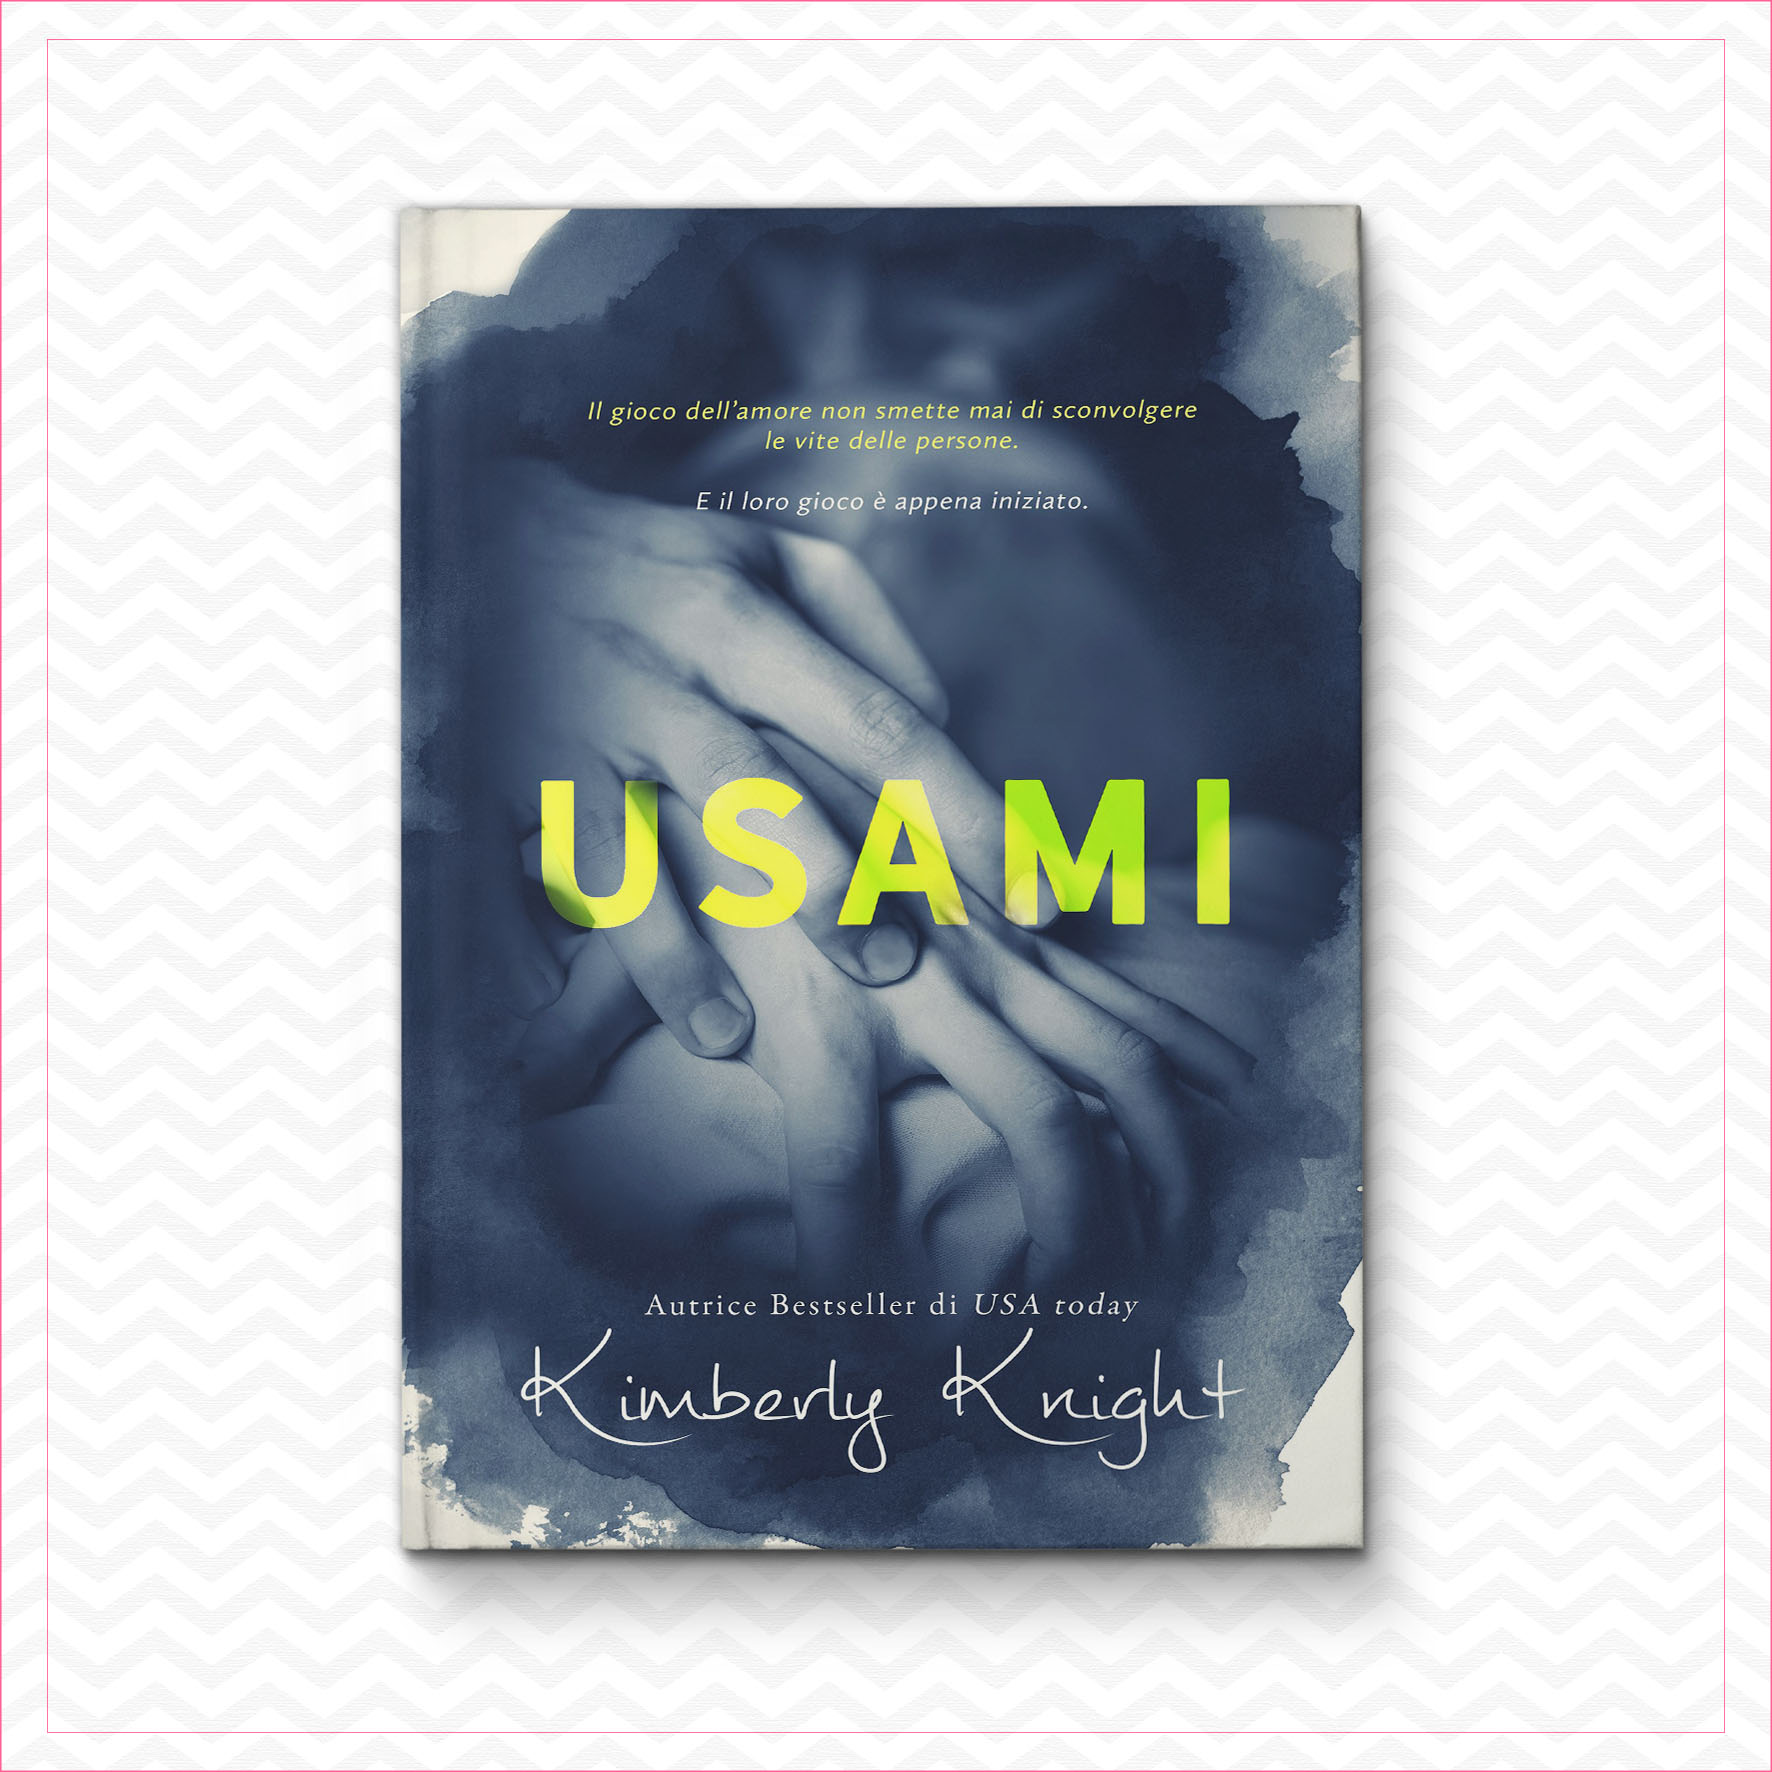 USAMI – Kimberly Knight – Versão Italiana